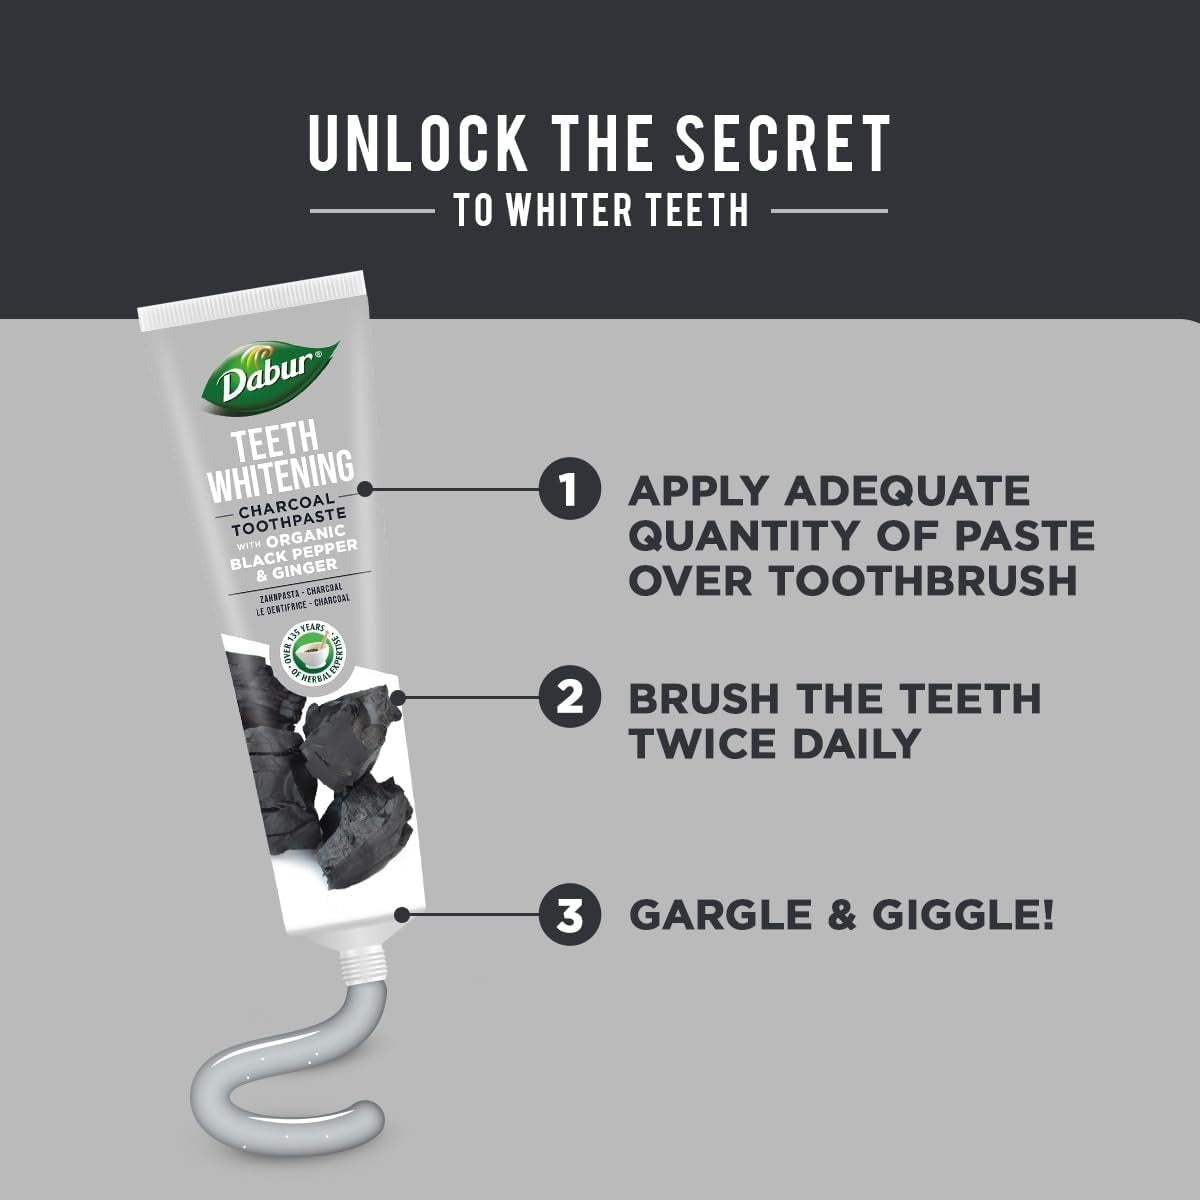 Dabur Teeth Whitening Charcoal Toothpaste 100ml